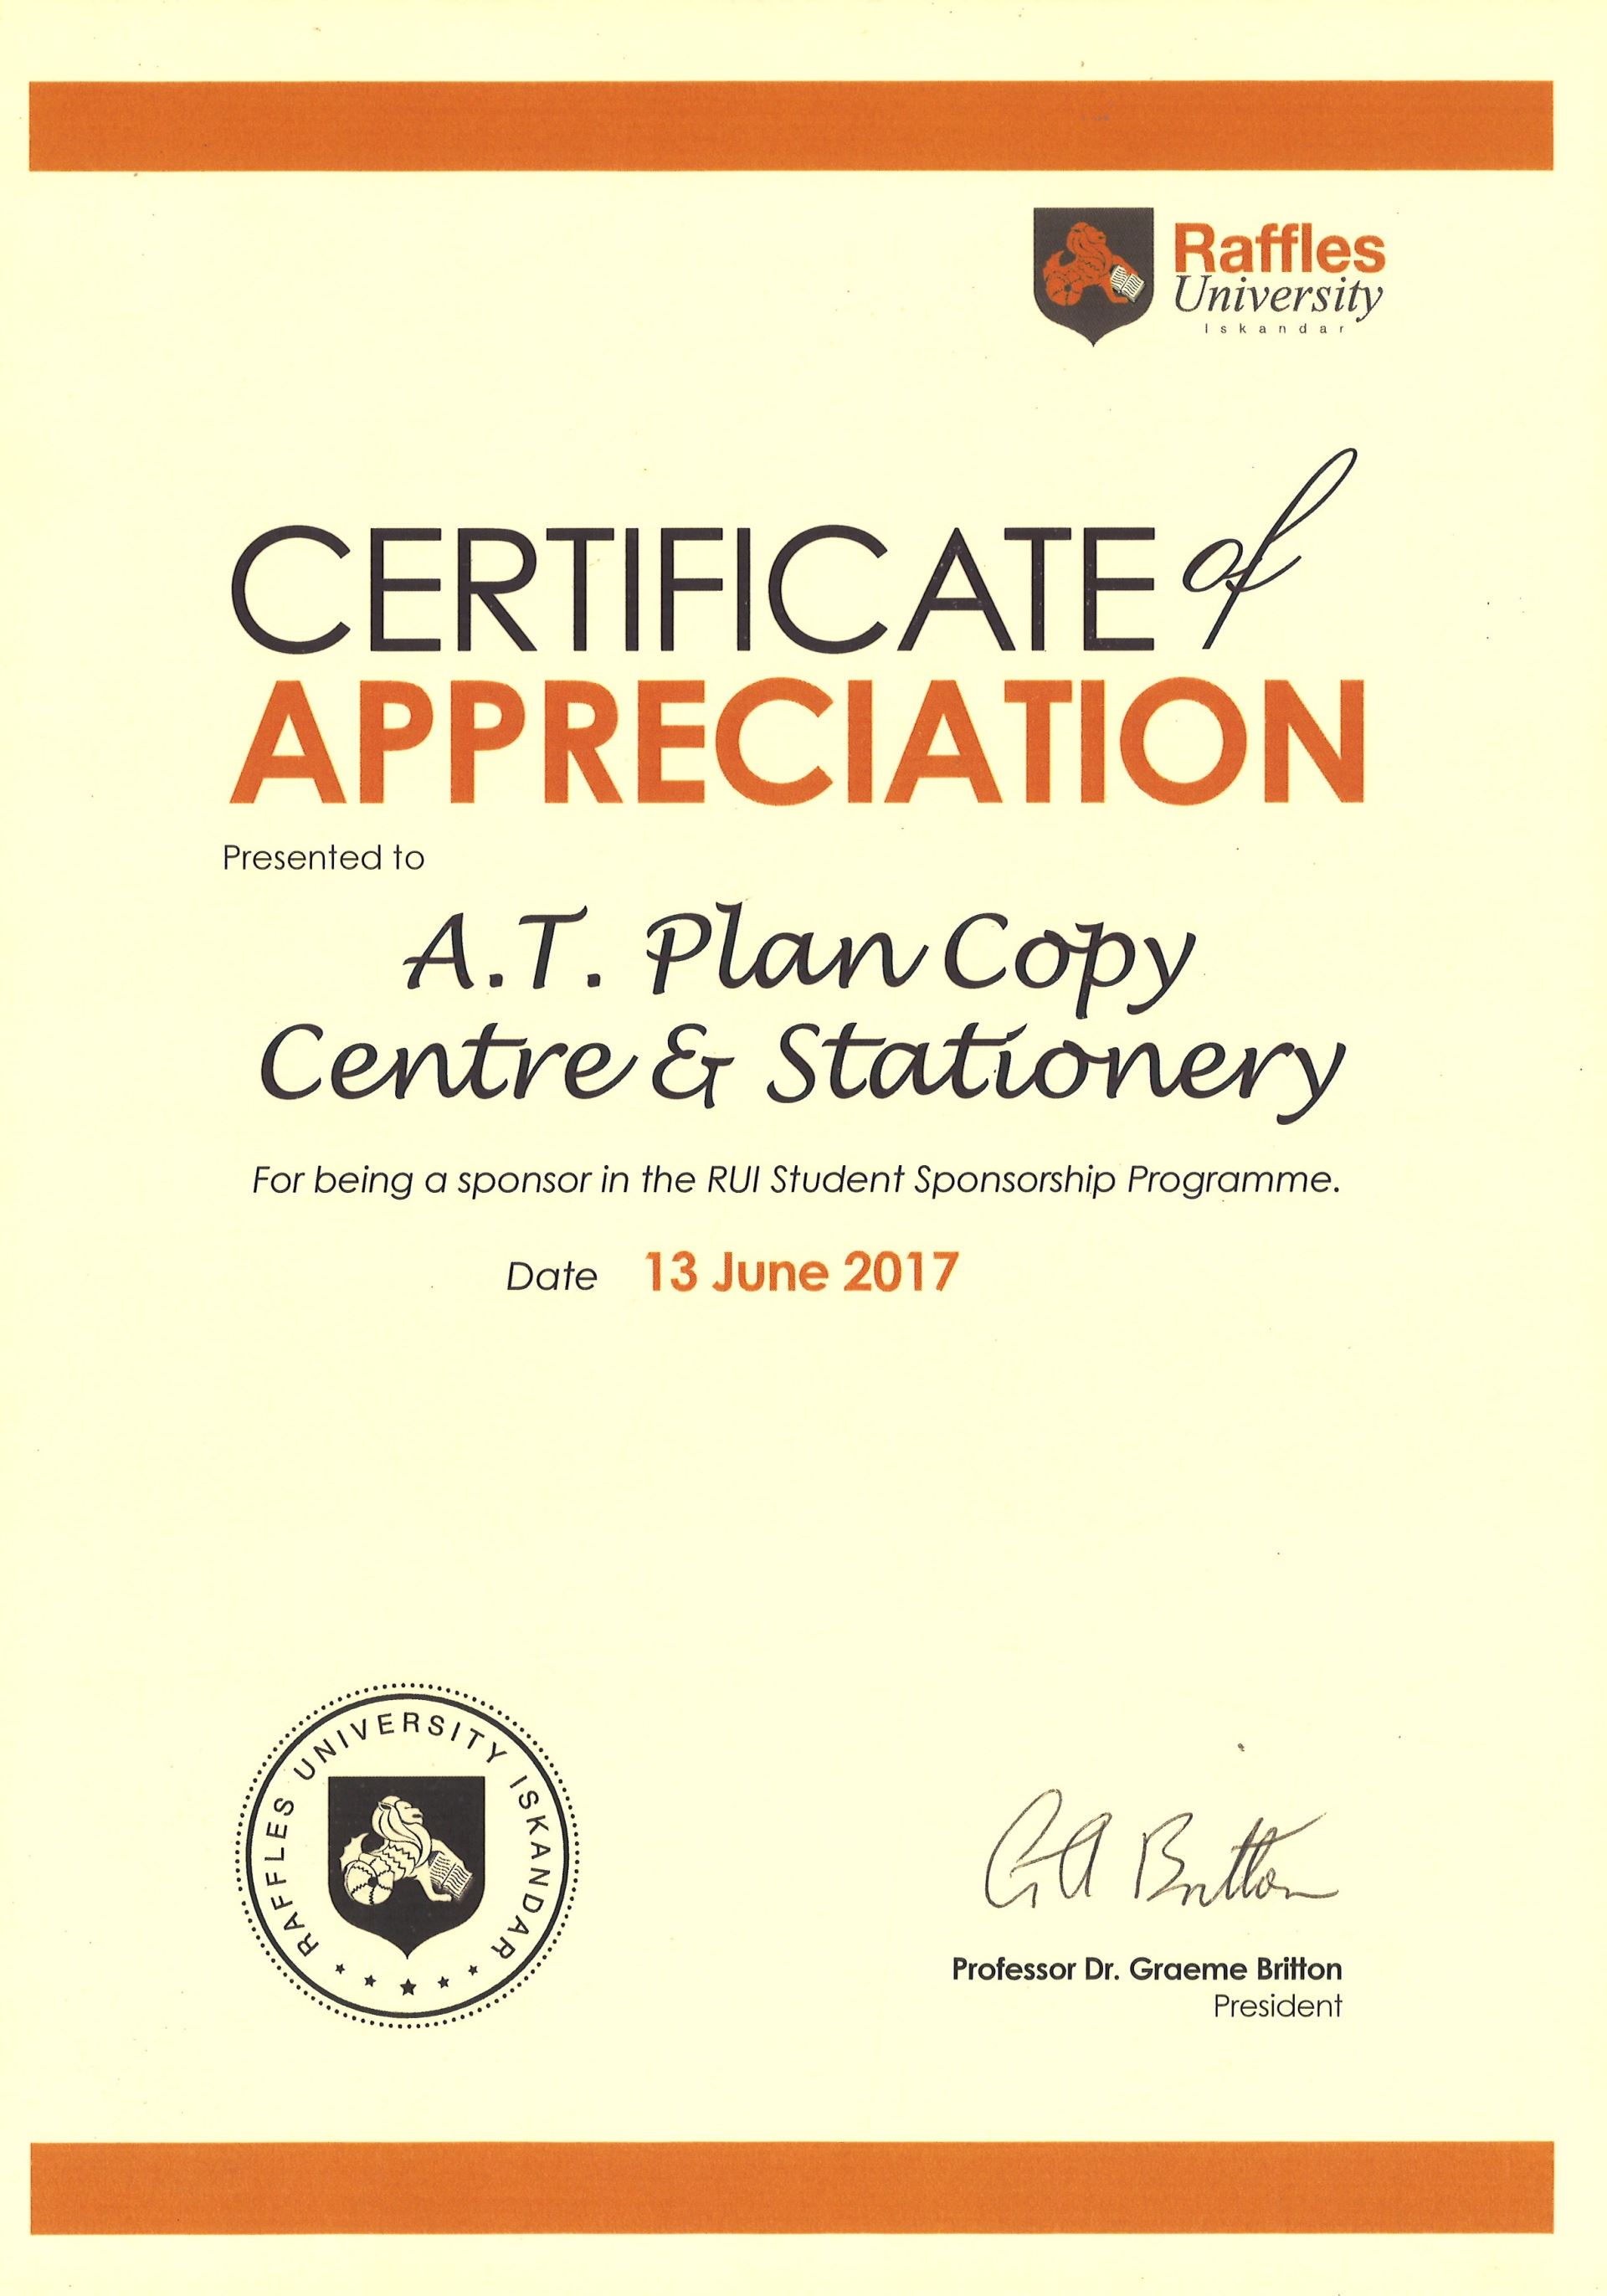 Certificate of Appreciation - Raffles University